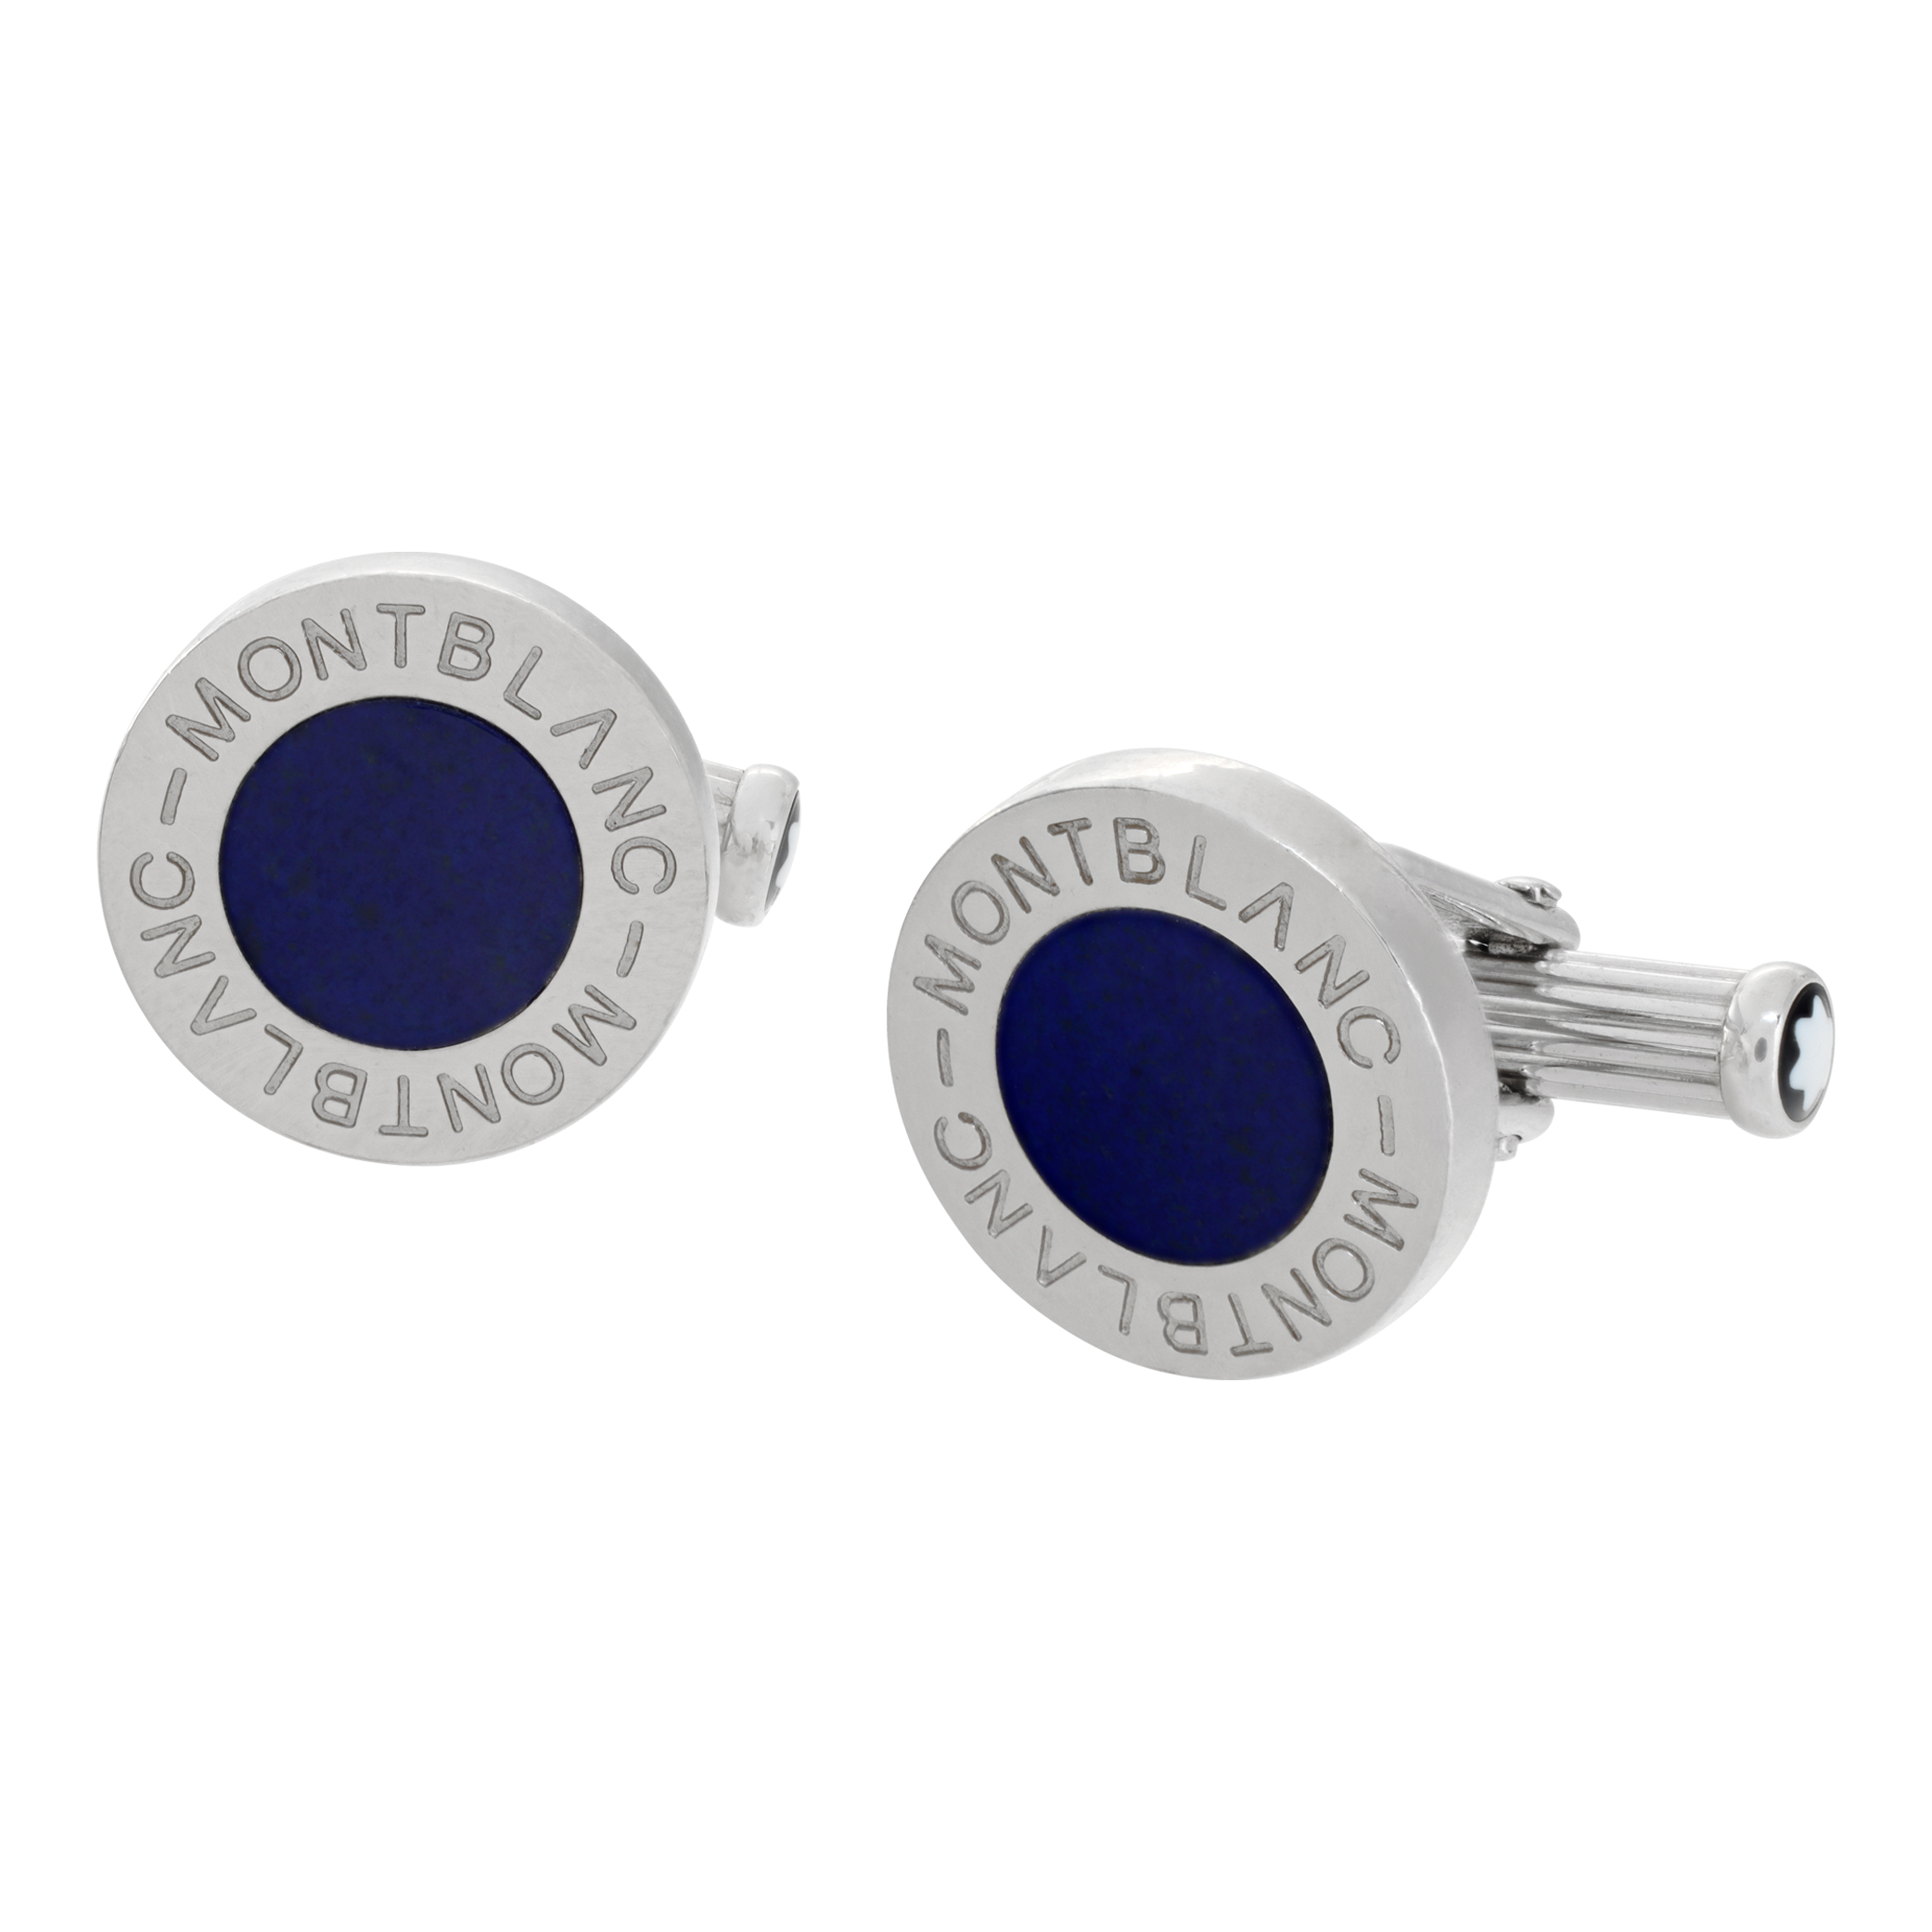 Montblanc Cufflinks in stainless steel with blue enamel center